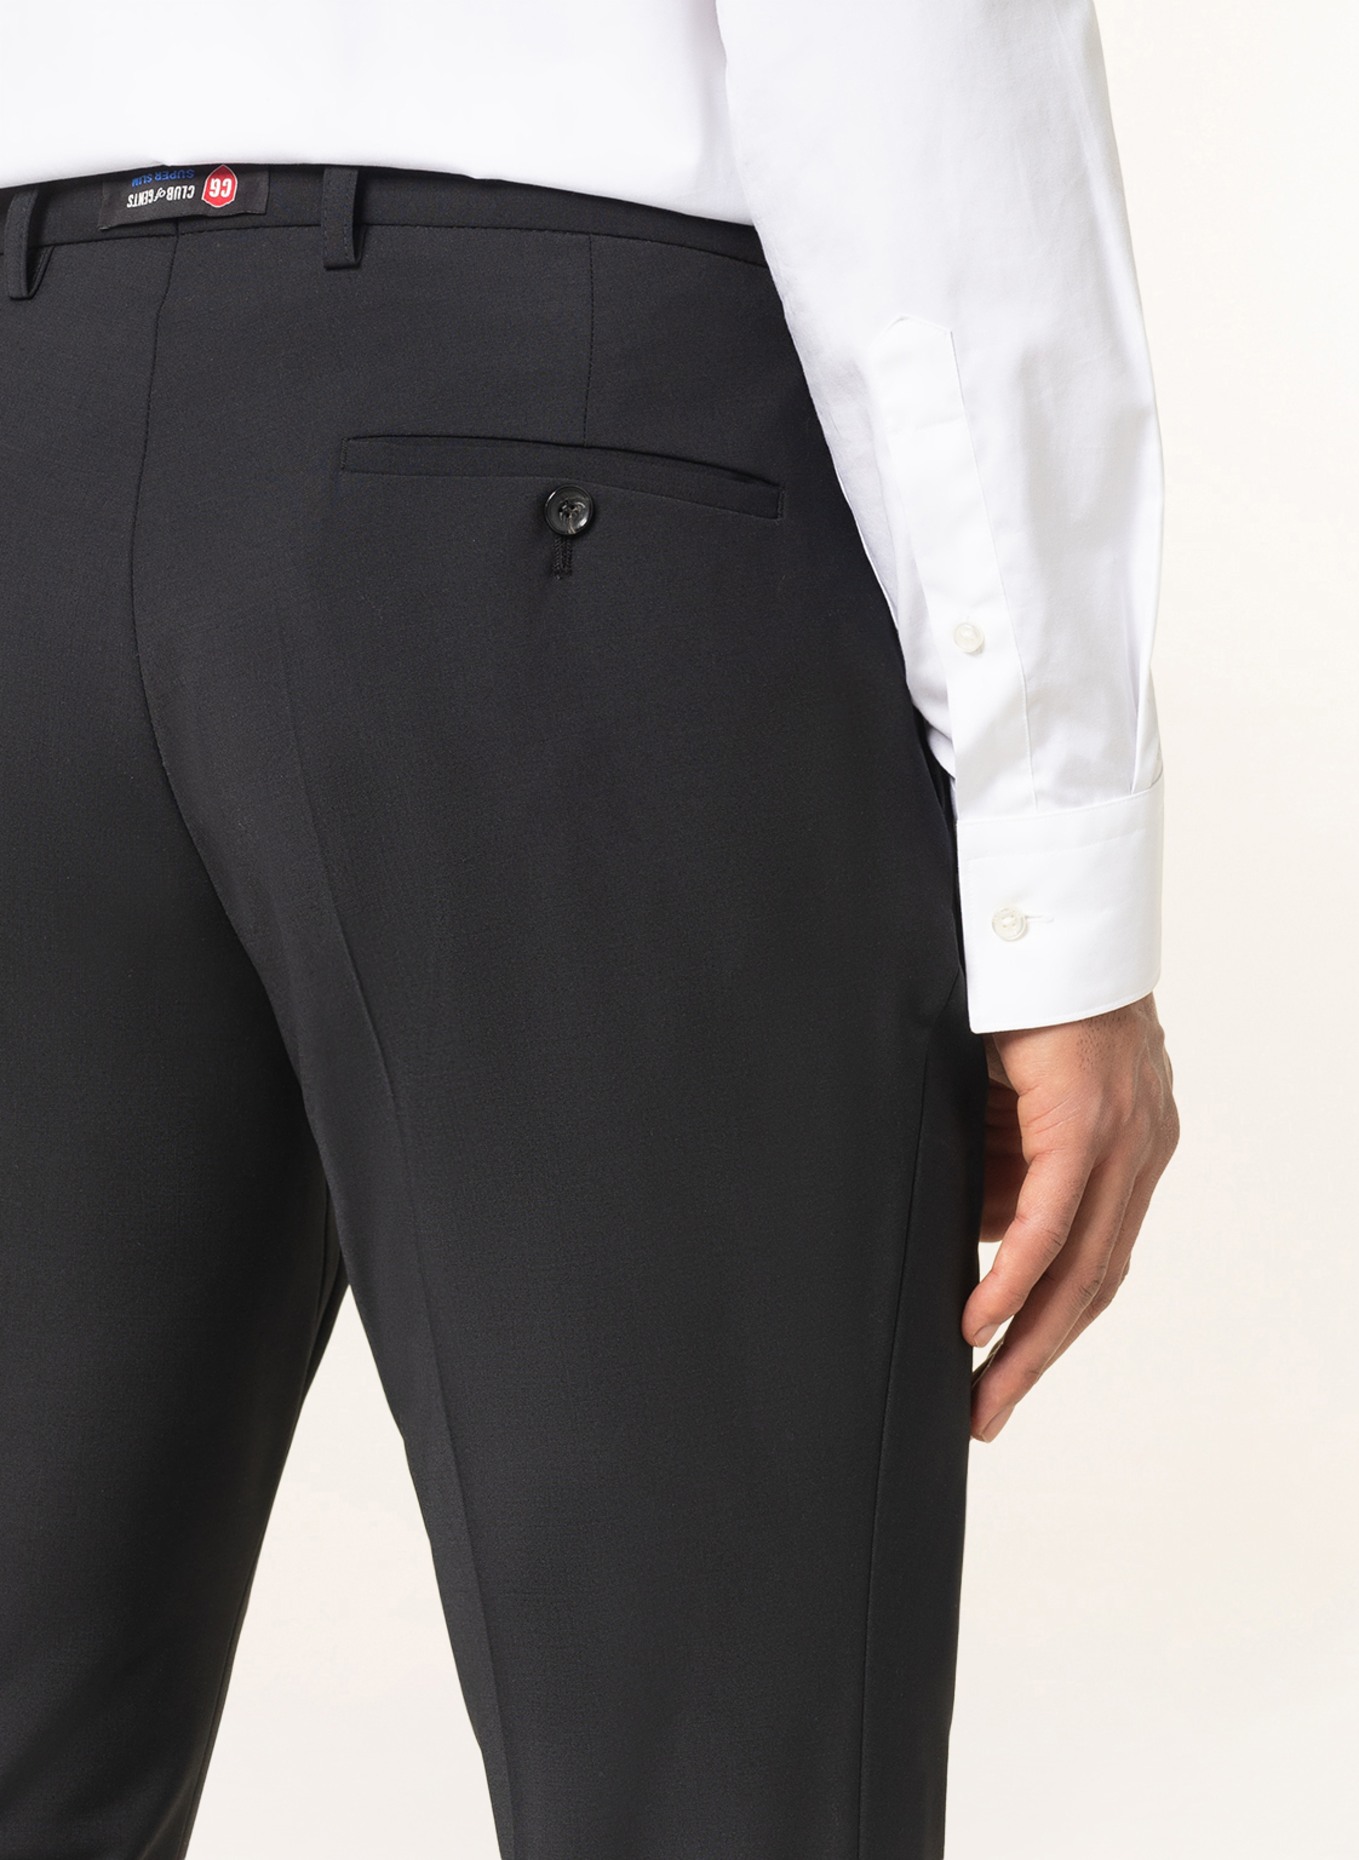 CG - CLUB of GENTS Suit trousers IKE super slim fit , Color: BLACK (Image 7)